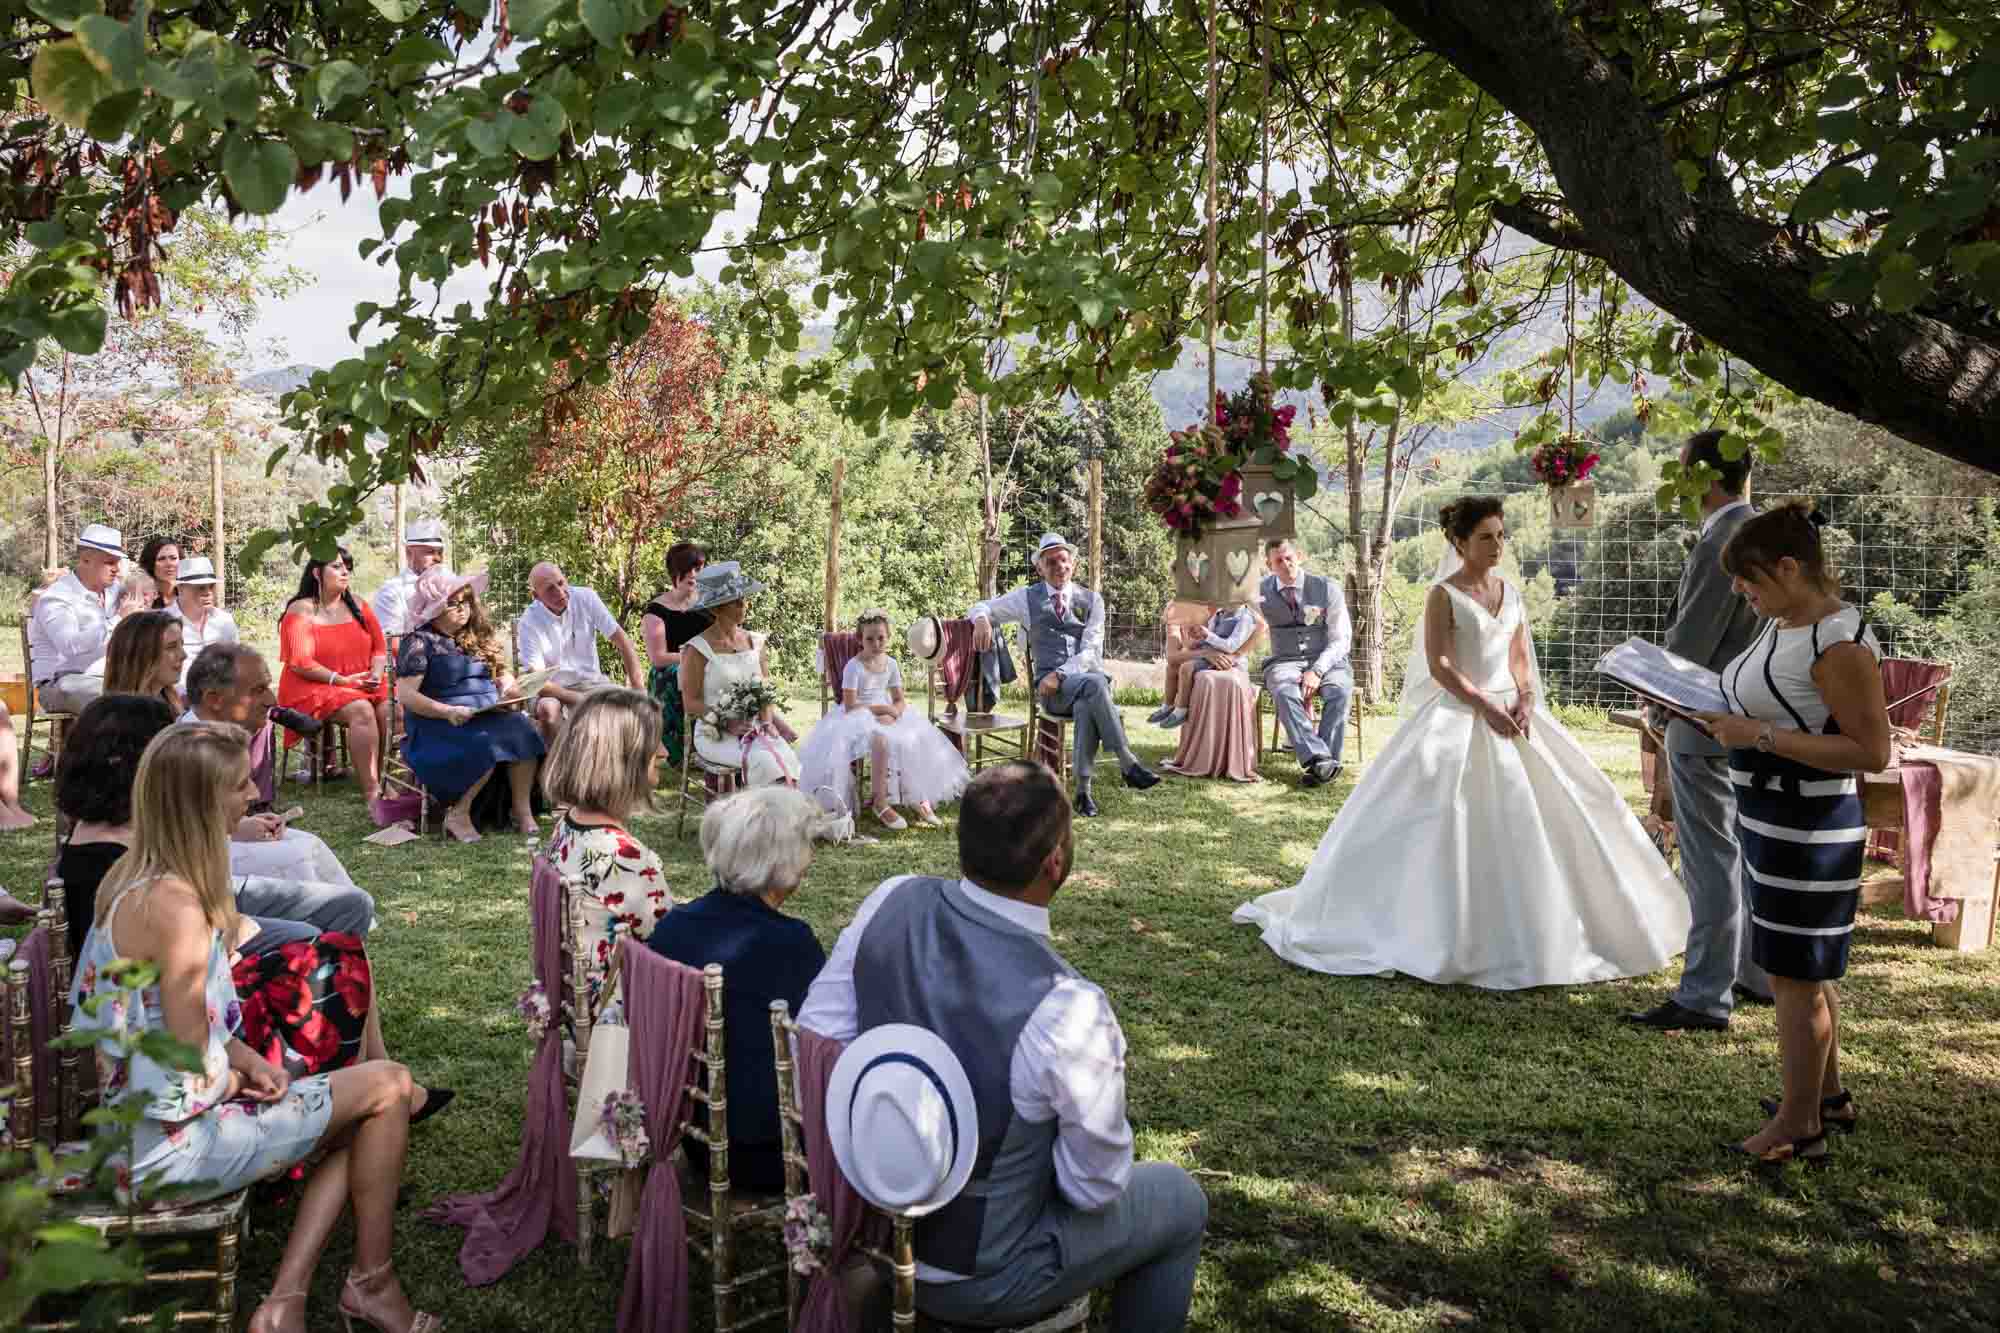 A beautiful outdoor wedding ceremony in an historic Mallorca finca